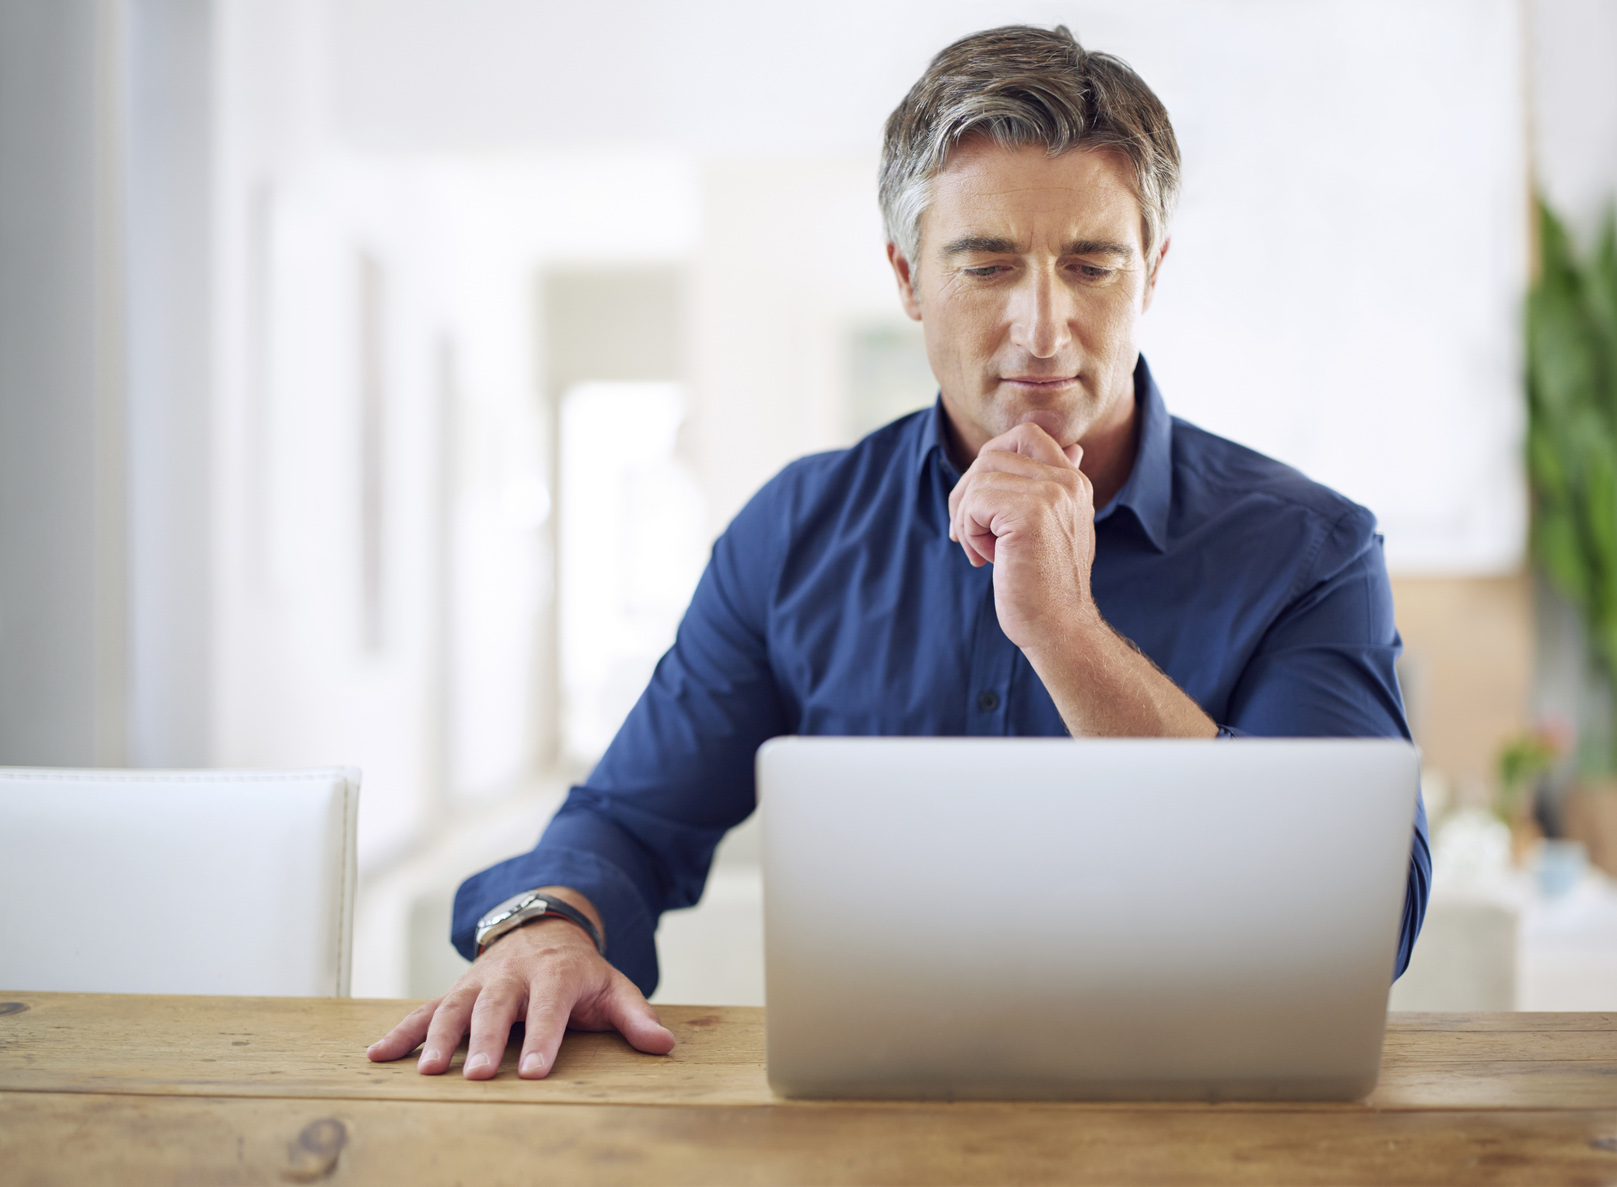 Man looking at a laptop computer screen and thinking